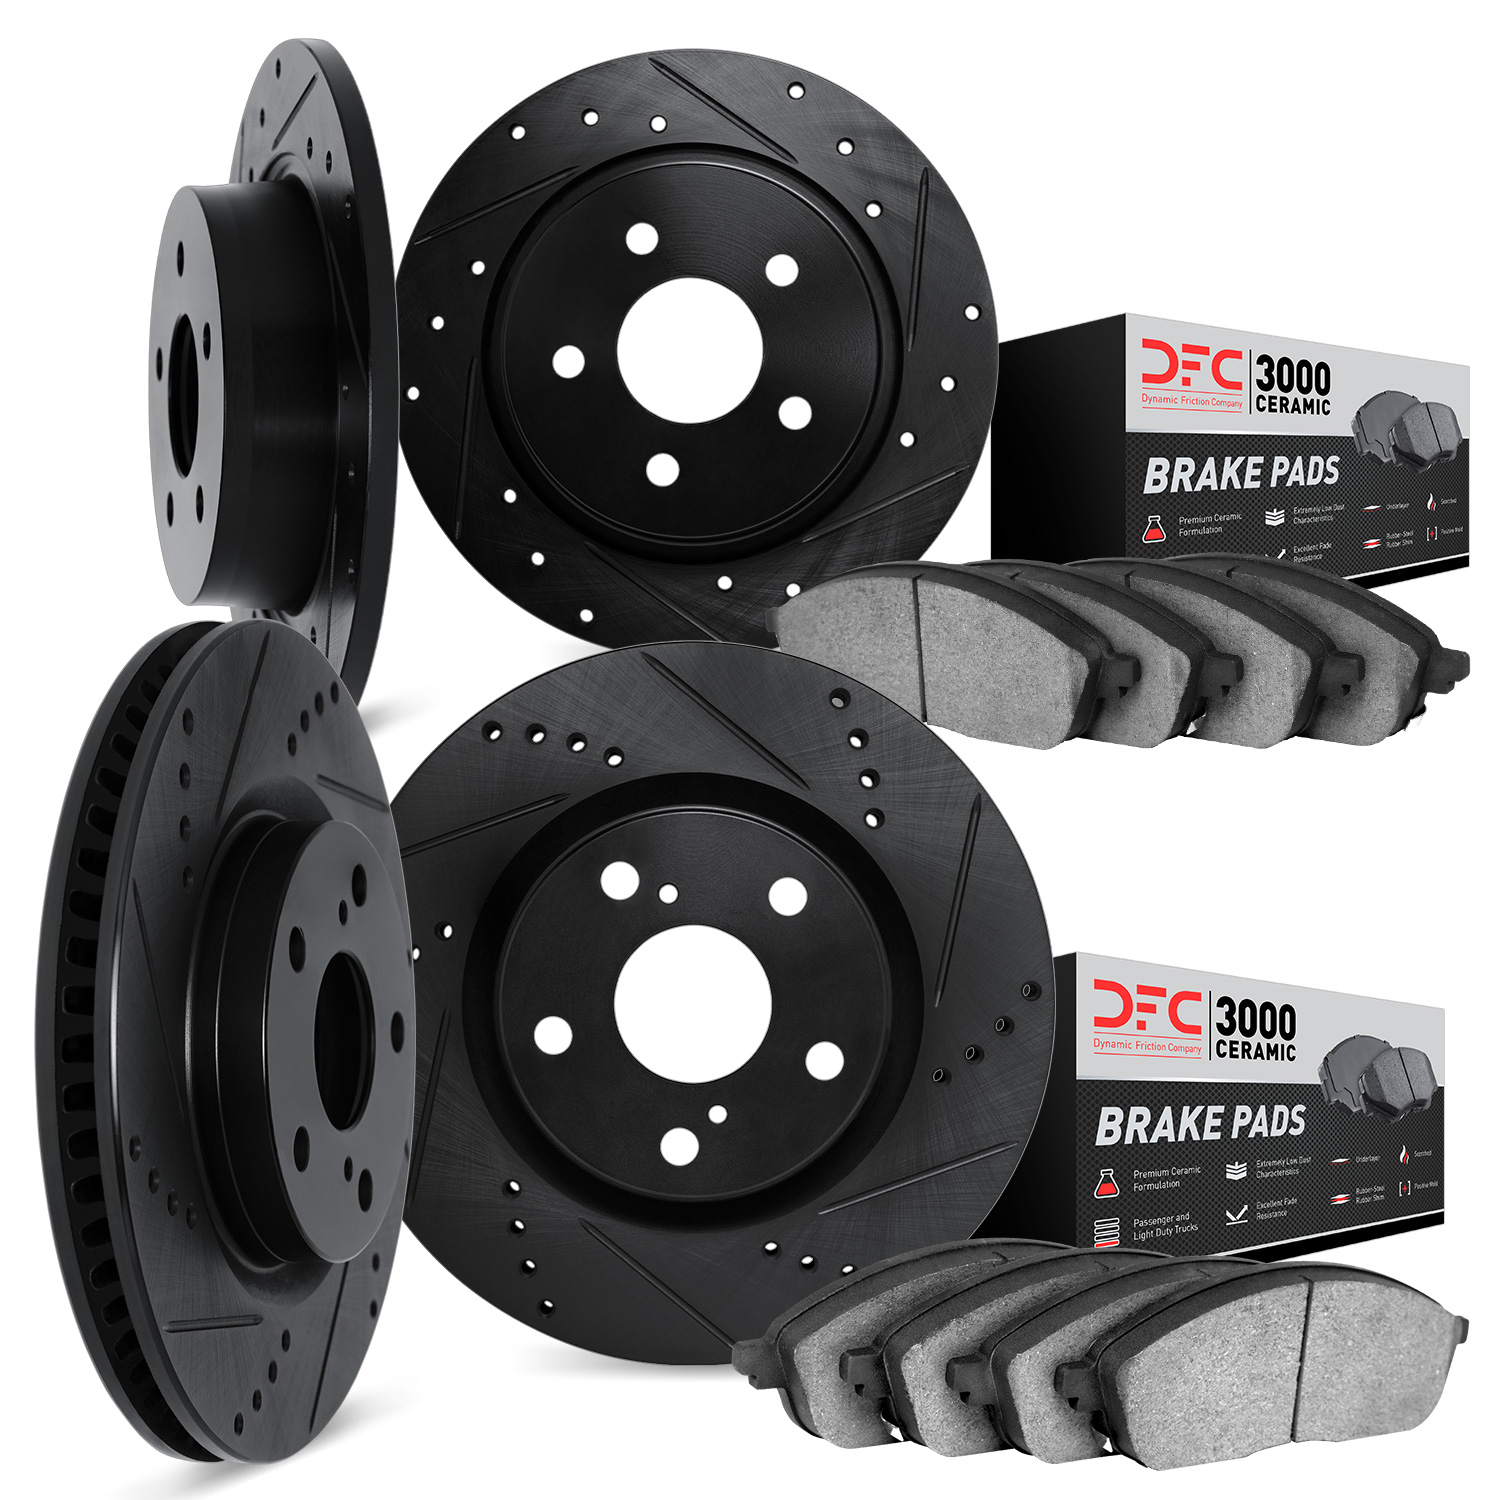 8304-54103 Drilled/Slotted Brake Rotors with 3000-Series Ceramic Brake Pads Kit [Black], 2013-2020 Ford/Lincoln/Mercury/Mazda, P